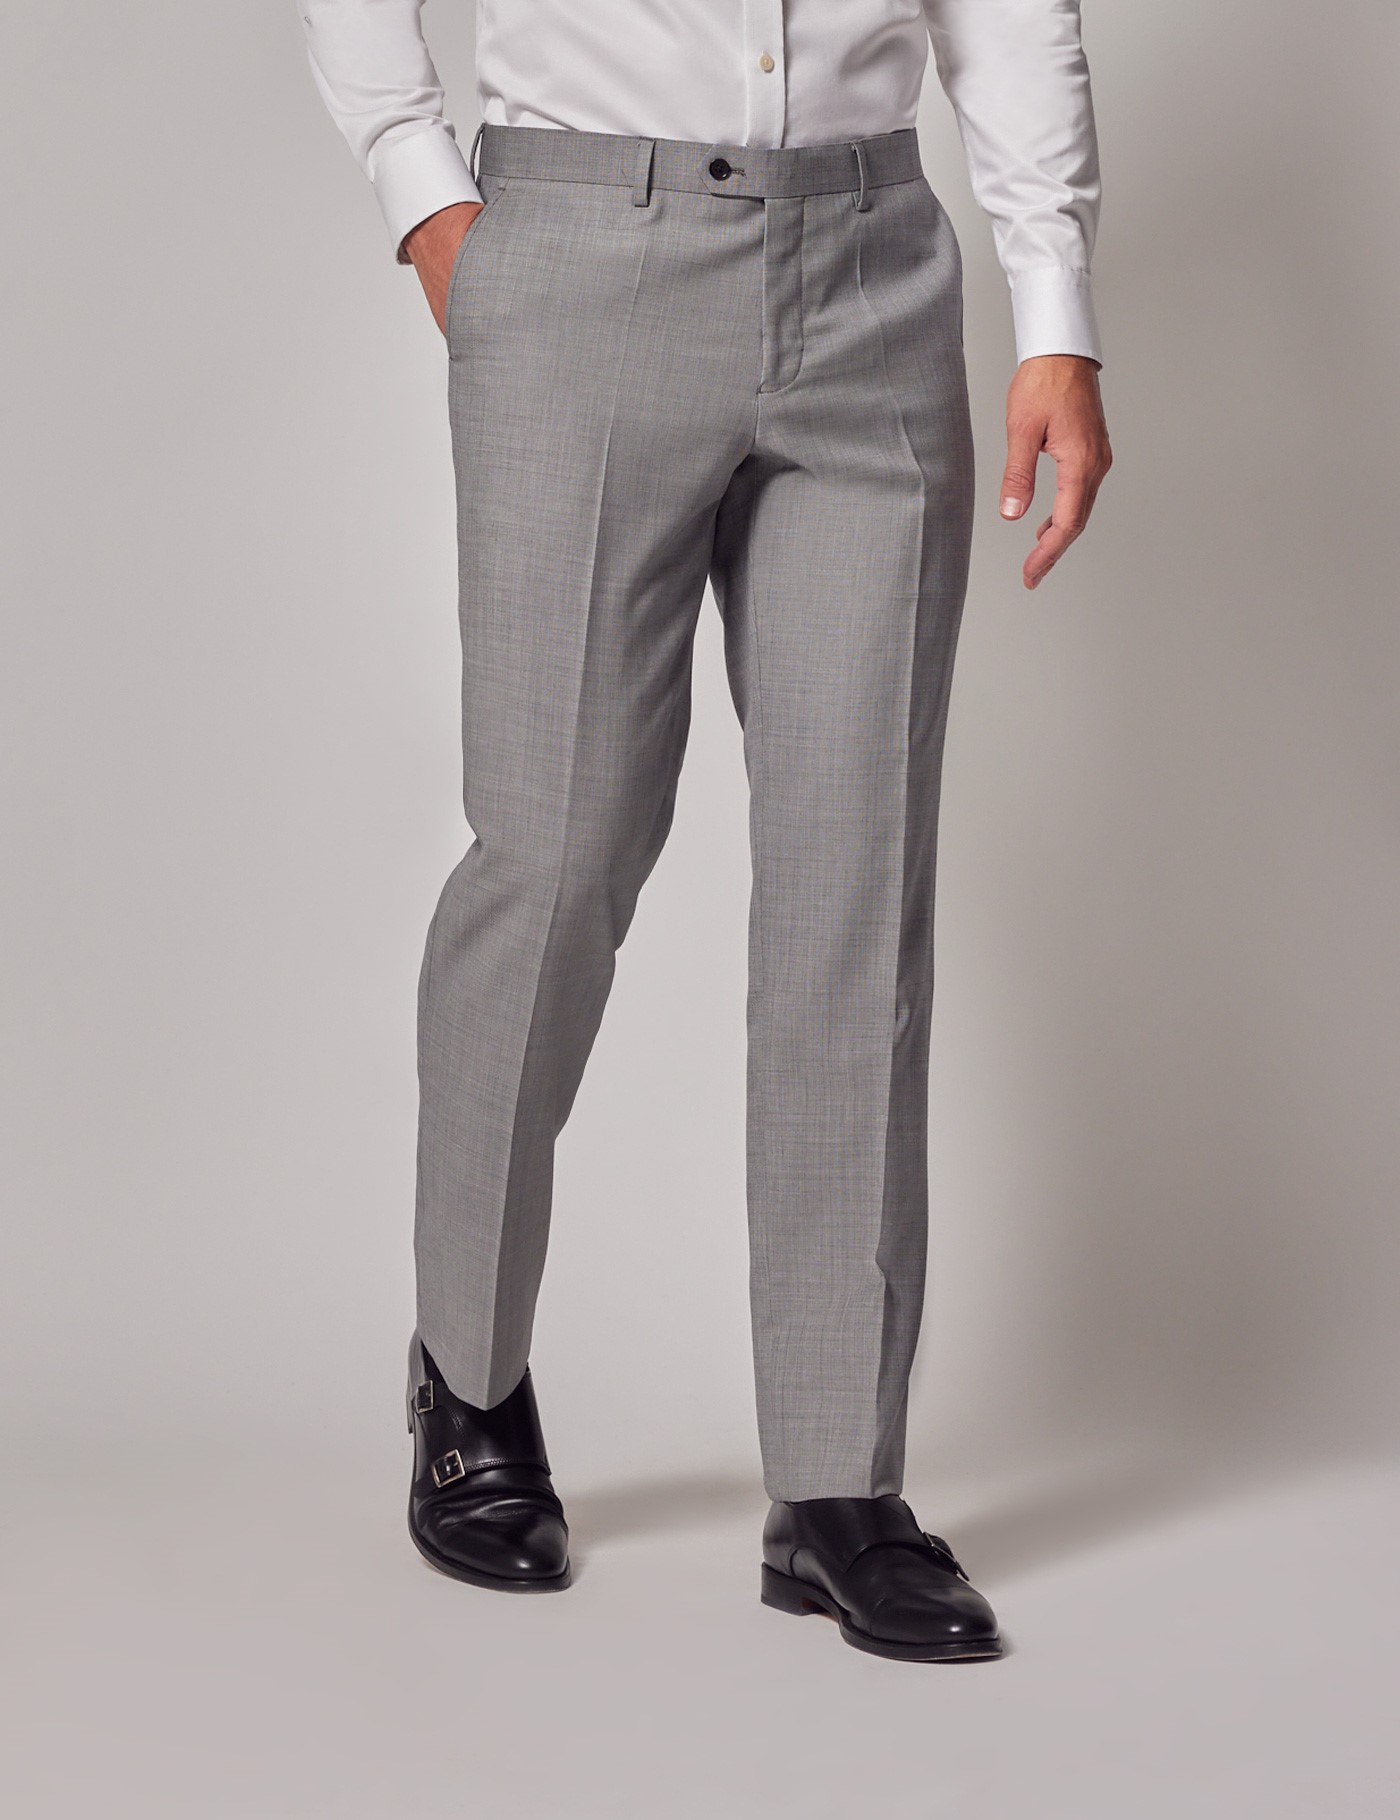 mens grey dress pants